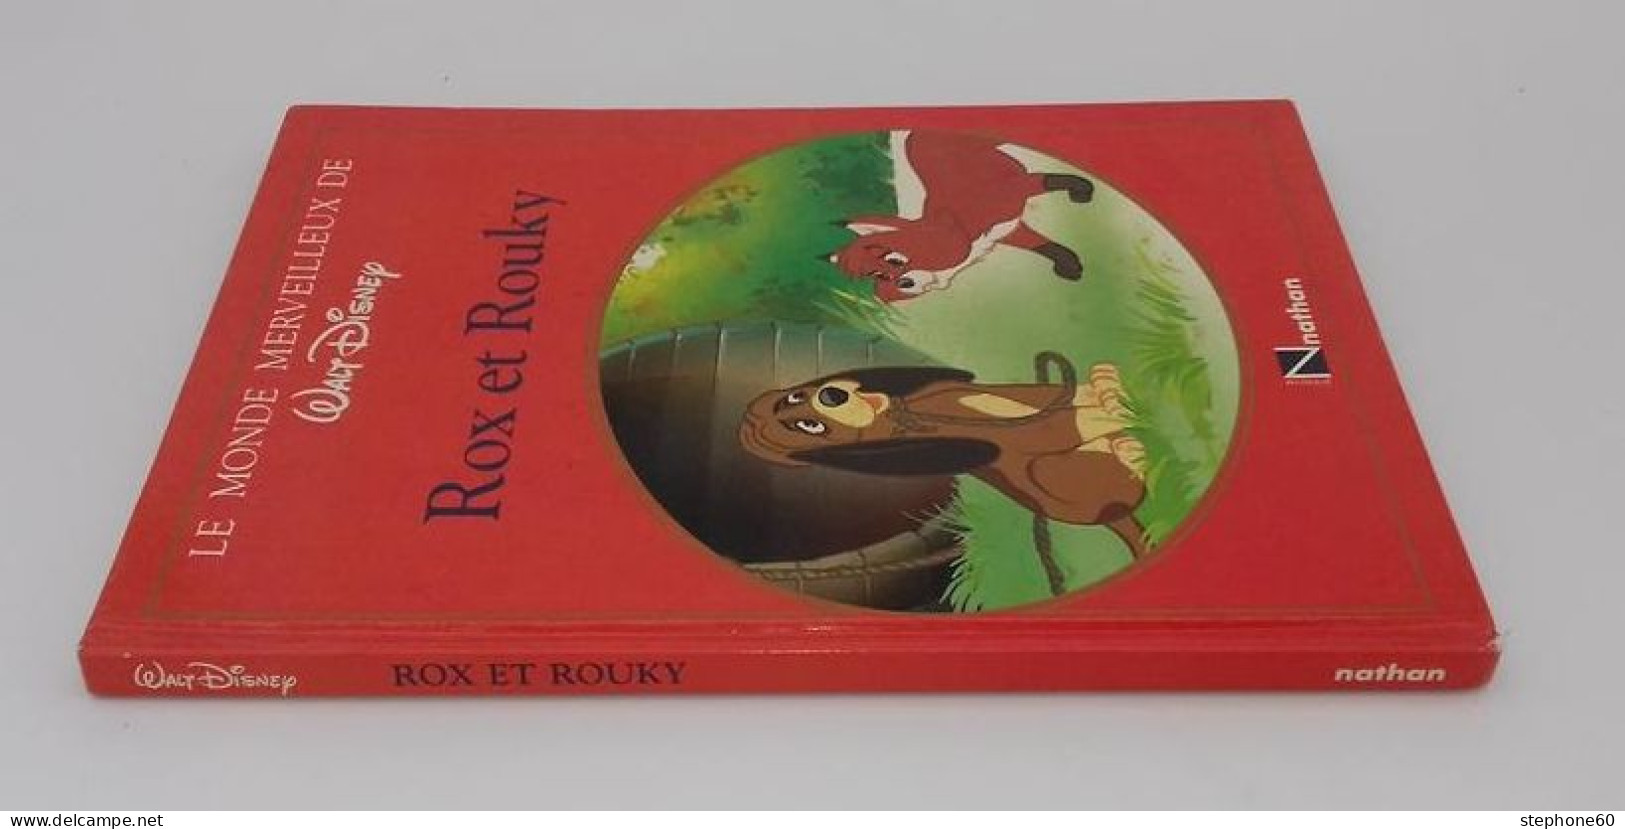 999 - (181) Rox Et Rouky - Walt Disney - Nathan - Disney